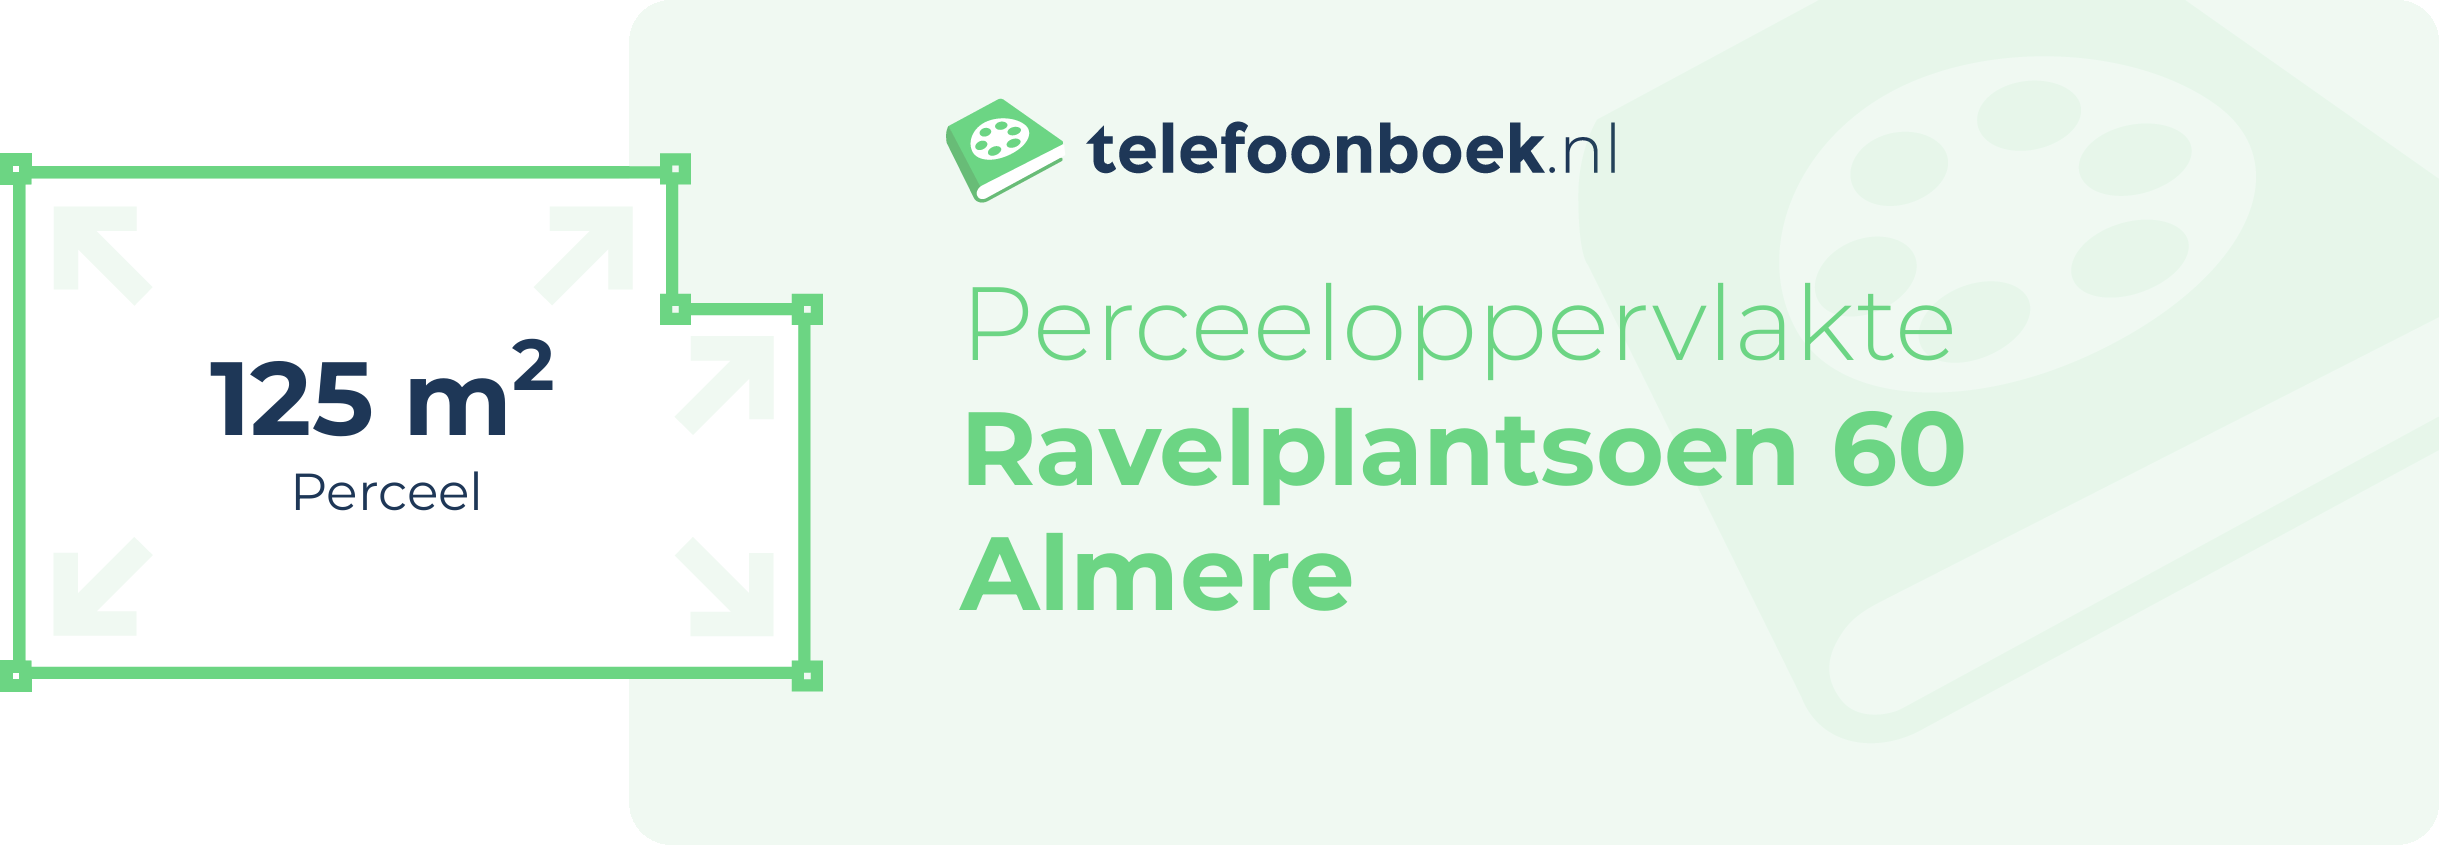 Perceeloppervlakte Ravelplantsoen 60 Almere